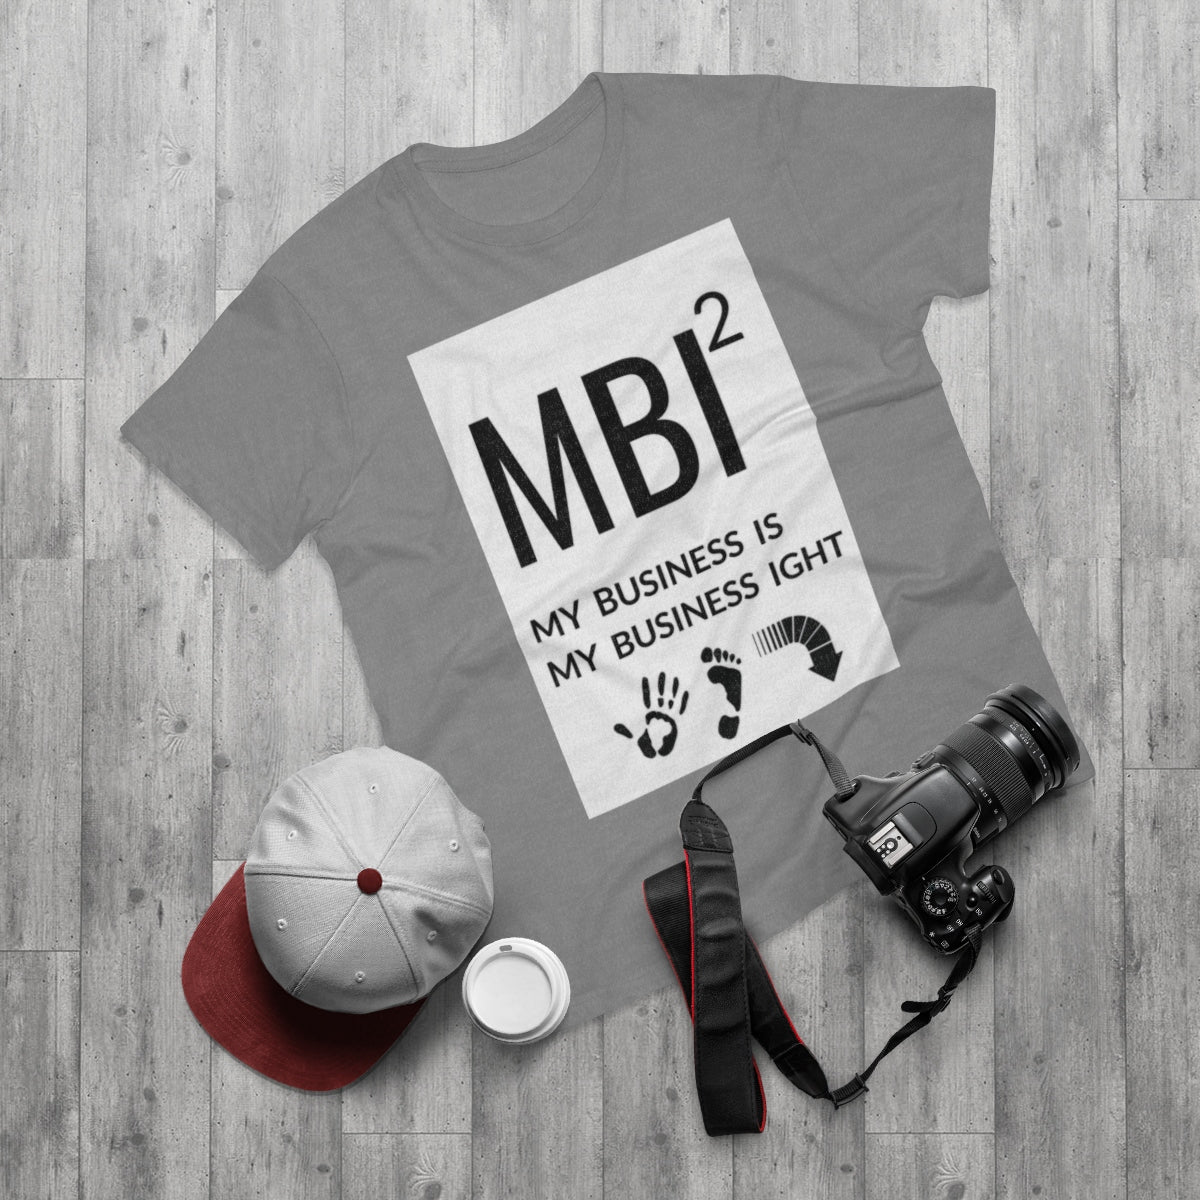 Five Toes Down MBI Single Jersey Men's T-shirt